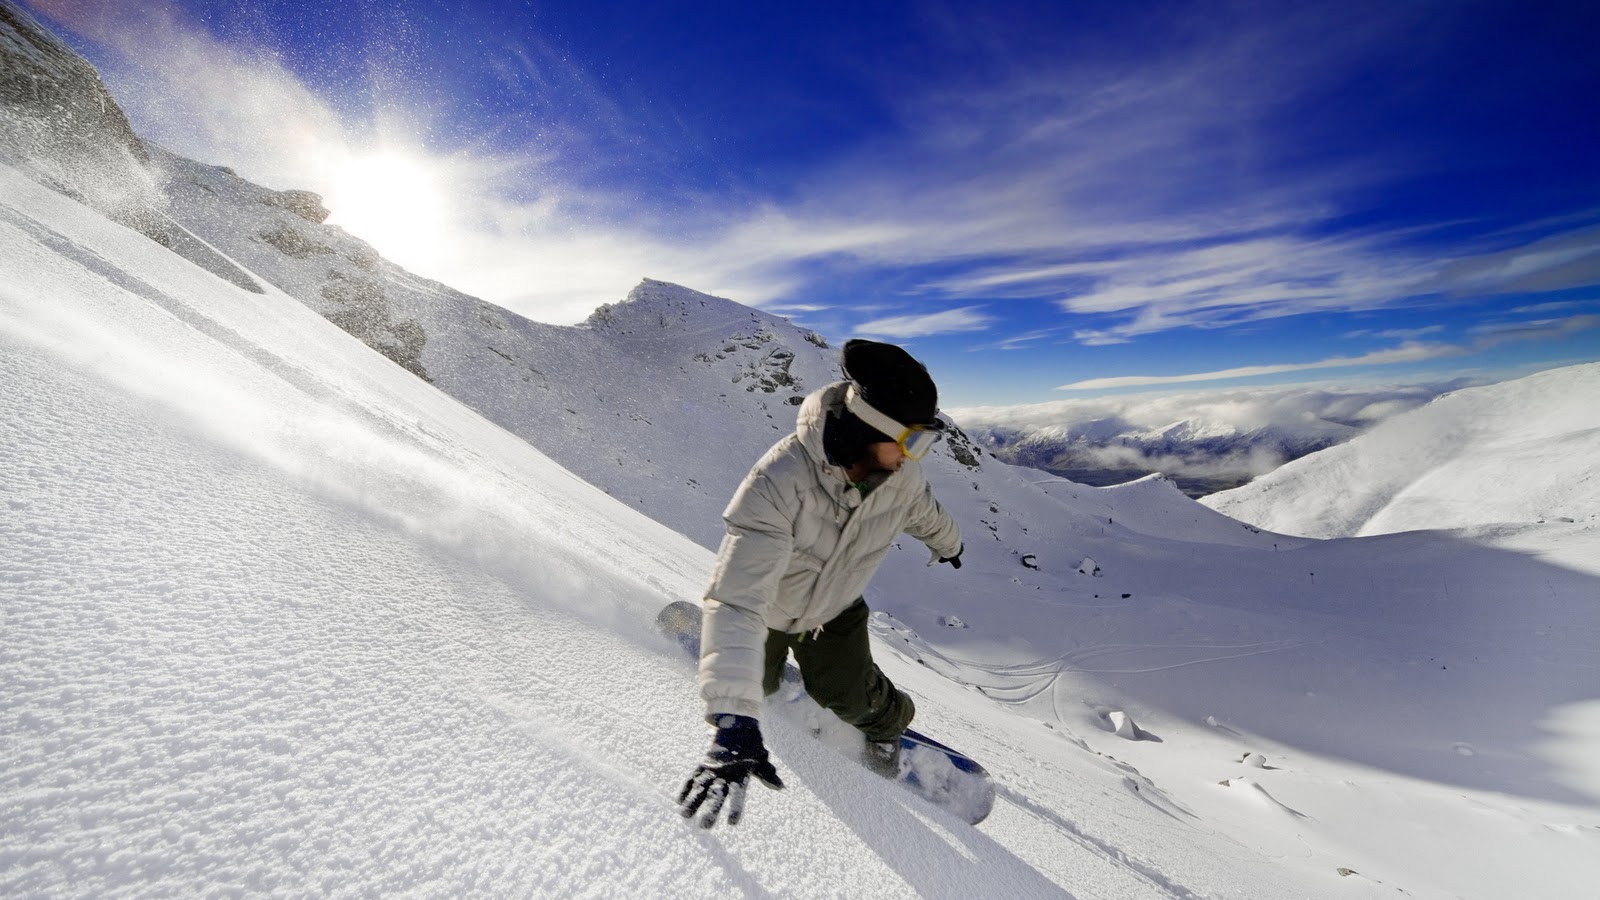 Snowboarding Wallpaper HD Desktop